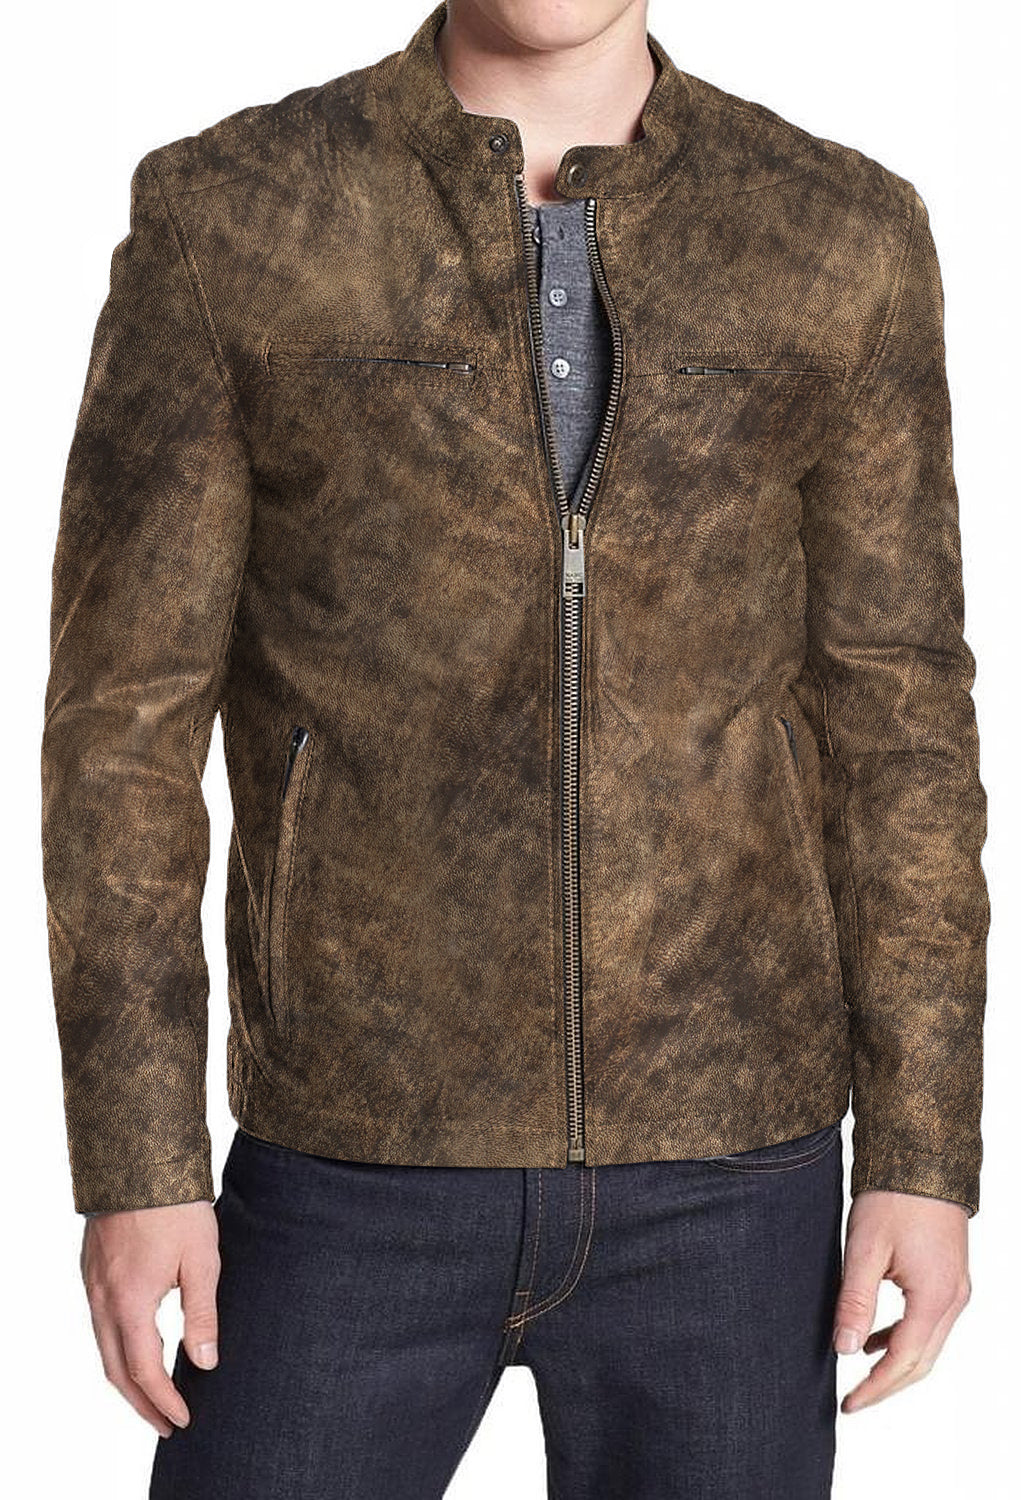 Leather Jackets Hub Mens Genuine Lambskin Leather Jacket (Black, Racer Jacket) - 1501021